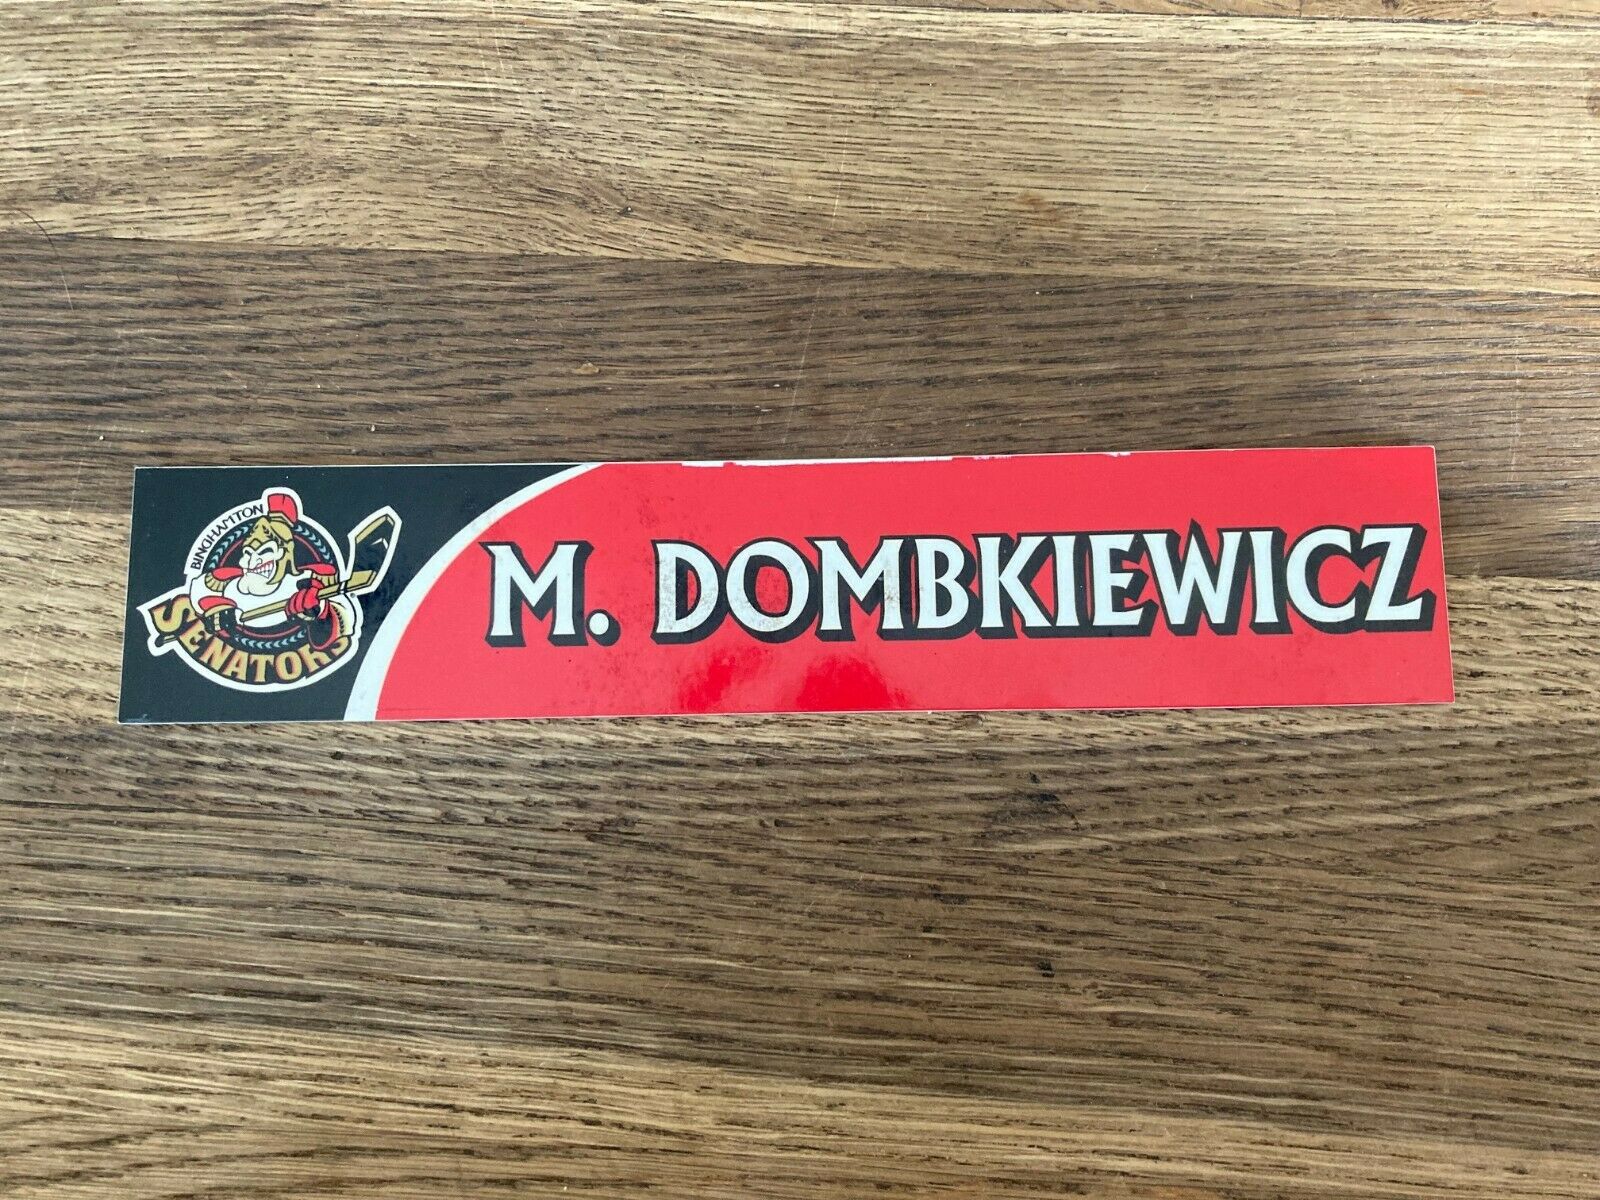 Dombkiewicz Binghamton Senators Game Used Locker Room Nameplate